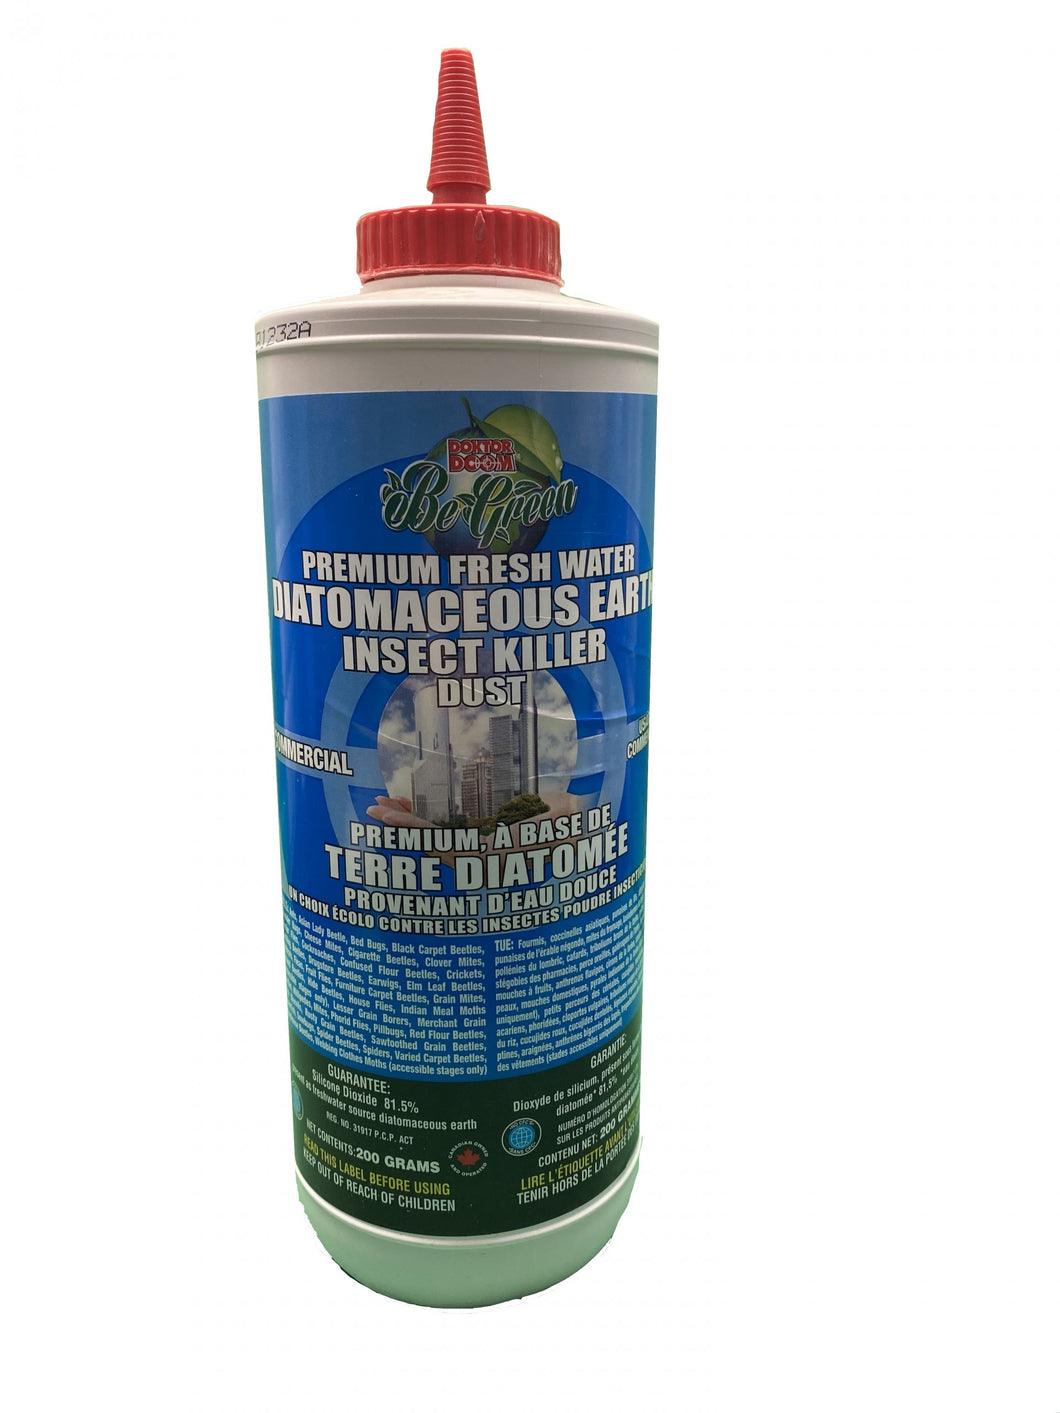 Premium Fresh Water Diatomaceous Earth Insect Killer Dust